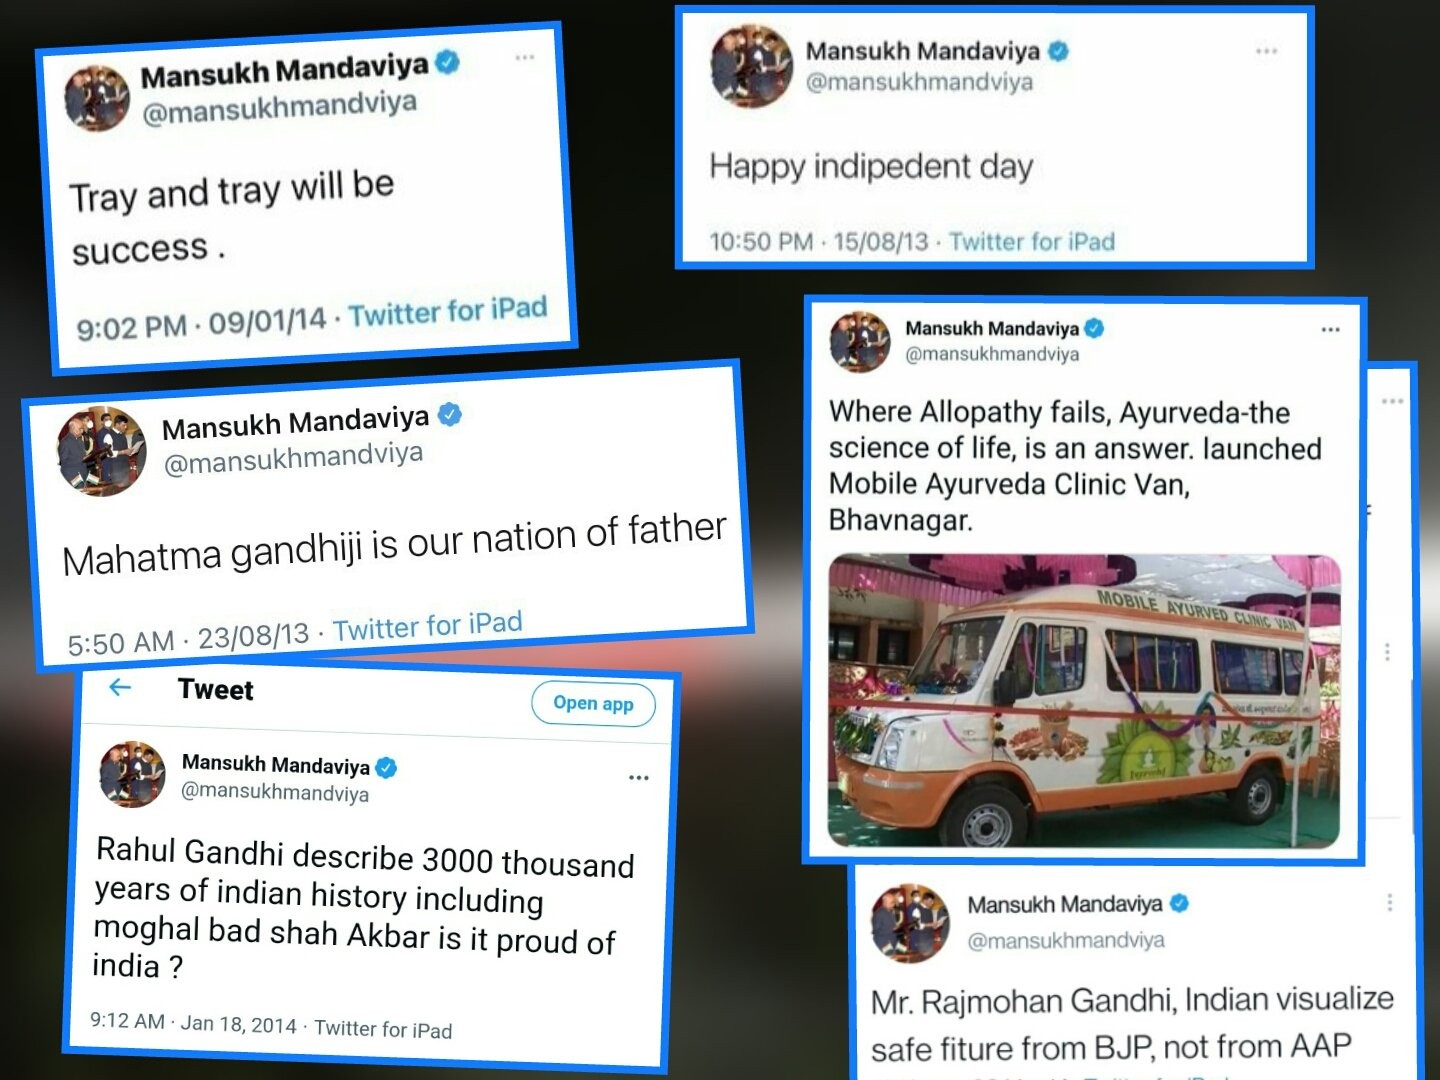 PM Modi New Ministers Cabinet New Cabinet Minister of India Modi New Cabinet New Health Minister Mansukh Mandaviya trolled over old tweets